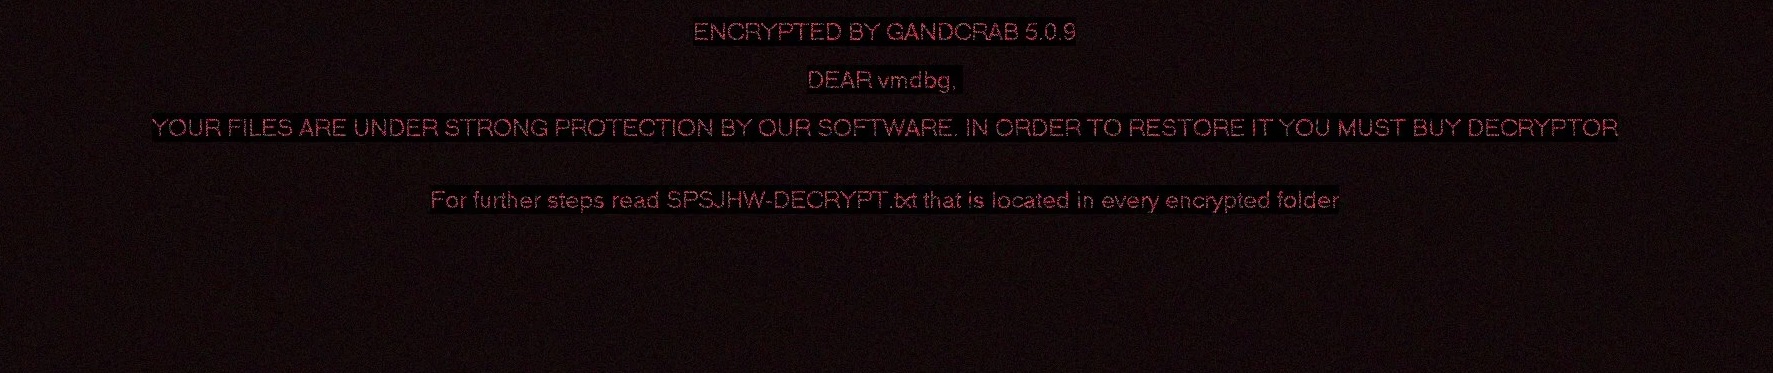 gandcrab 5.0.9 cryptovirus ransomware desktop wallpaper